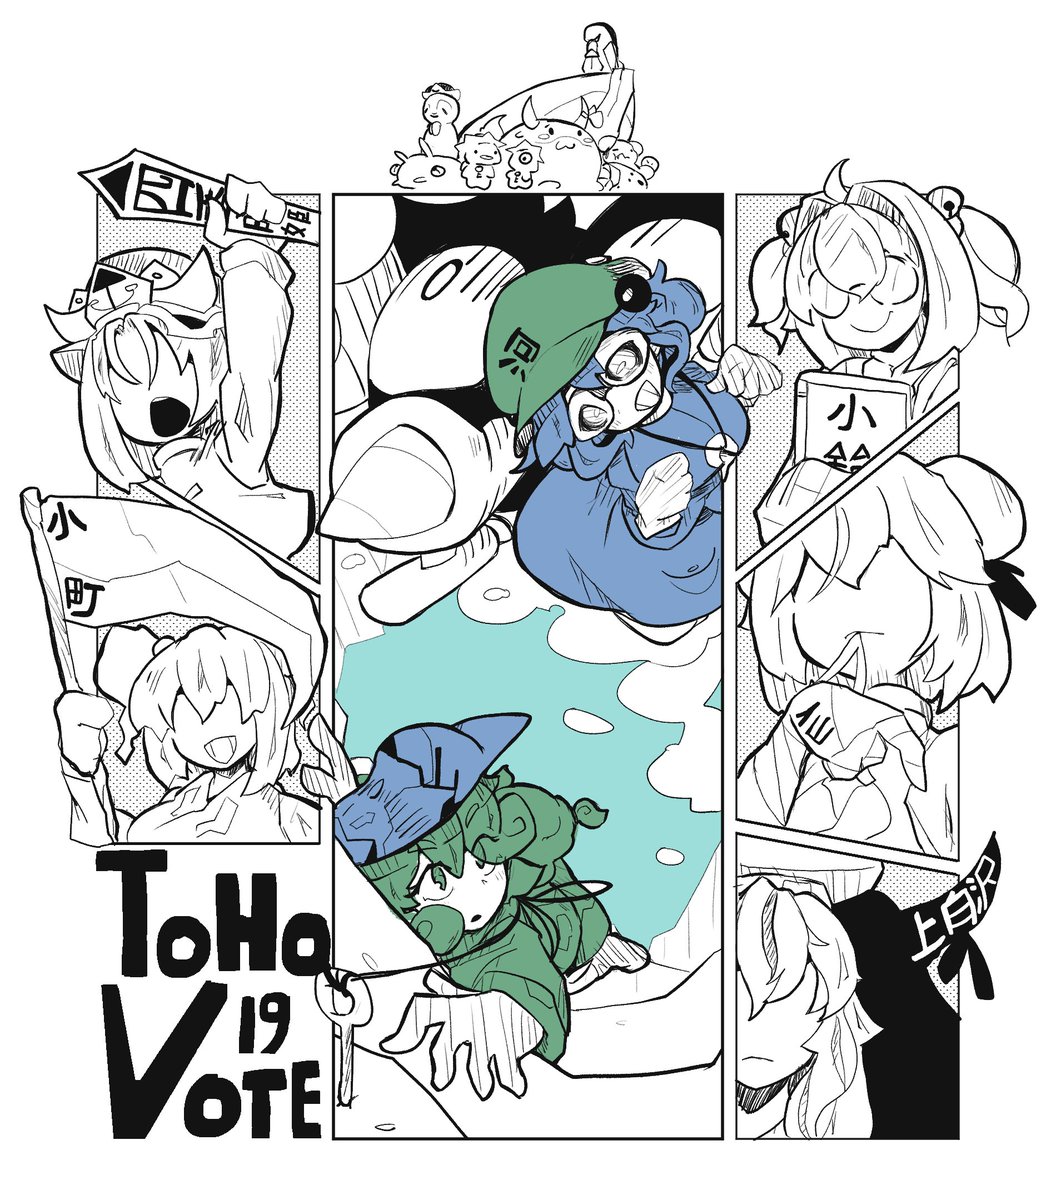 my picks
#東方project
#toho_vote19 